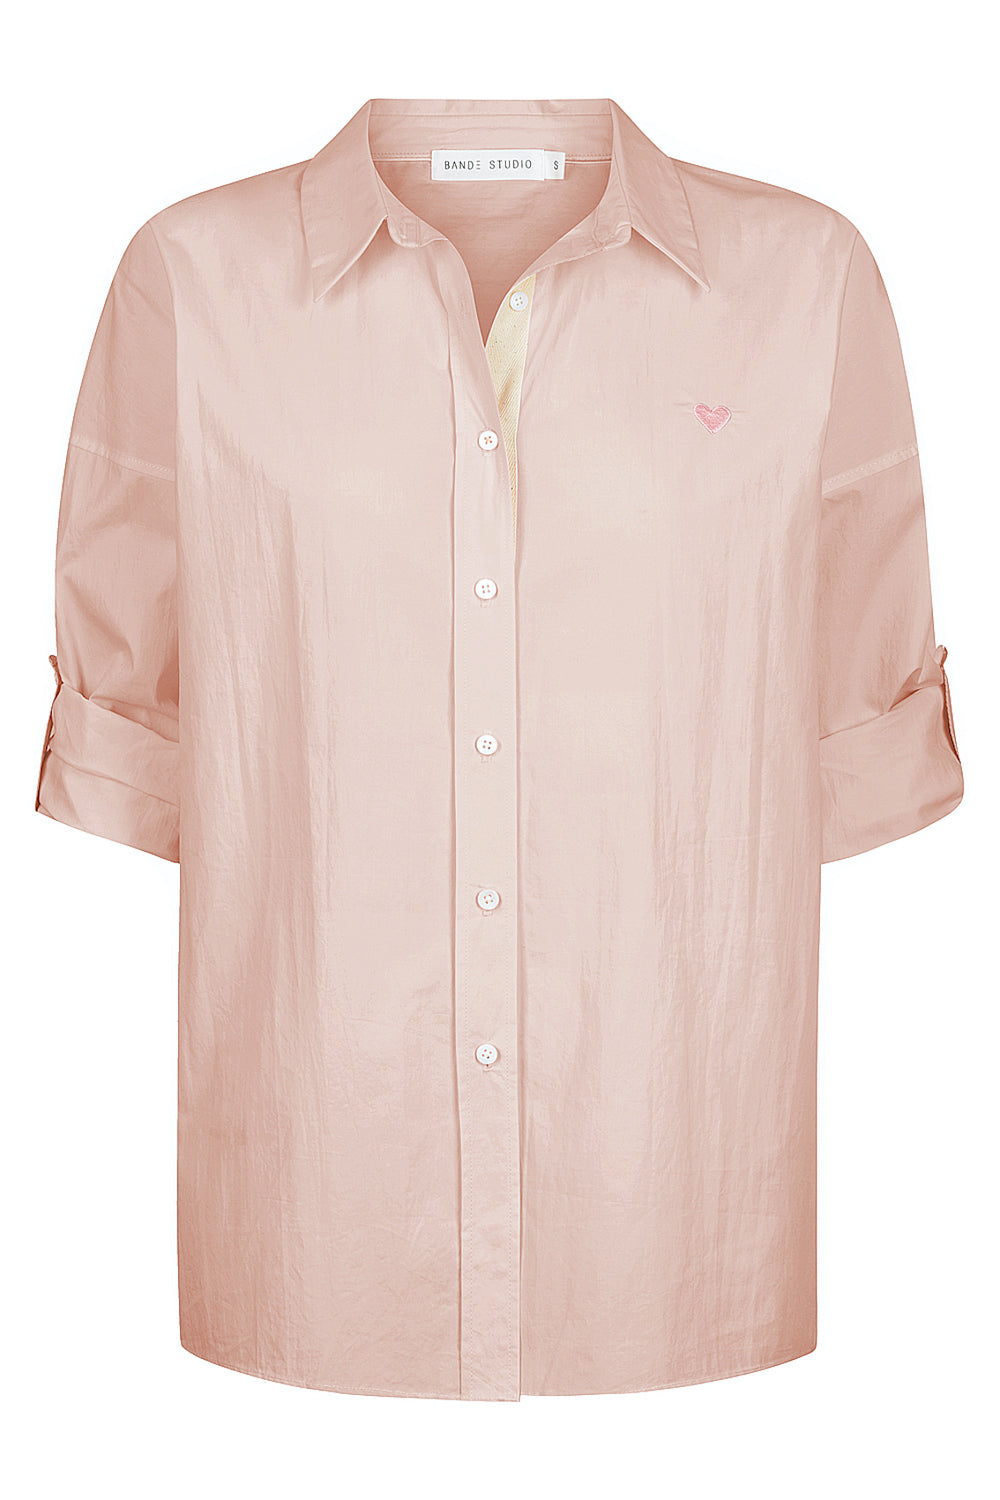 Iris Classic Oversize Shirt - peach pearl